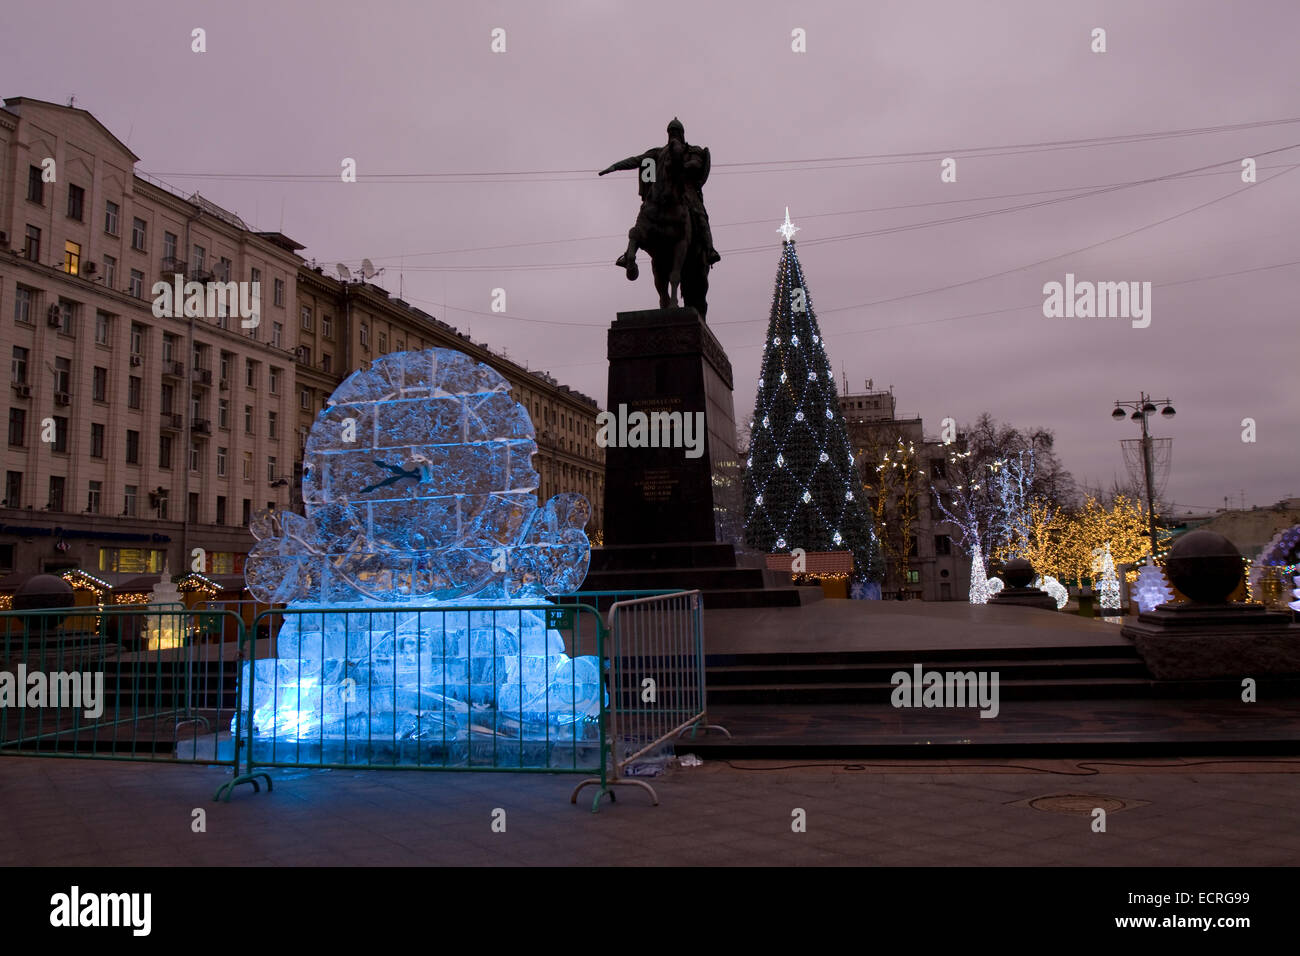 MOSCOW - DECEMBER 26, 2013: Ice clock and Christmas tree on Tverskaya street near monument to king Yuriy Dolgorukiy. Stock Photo